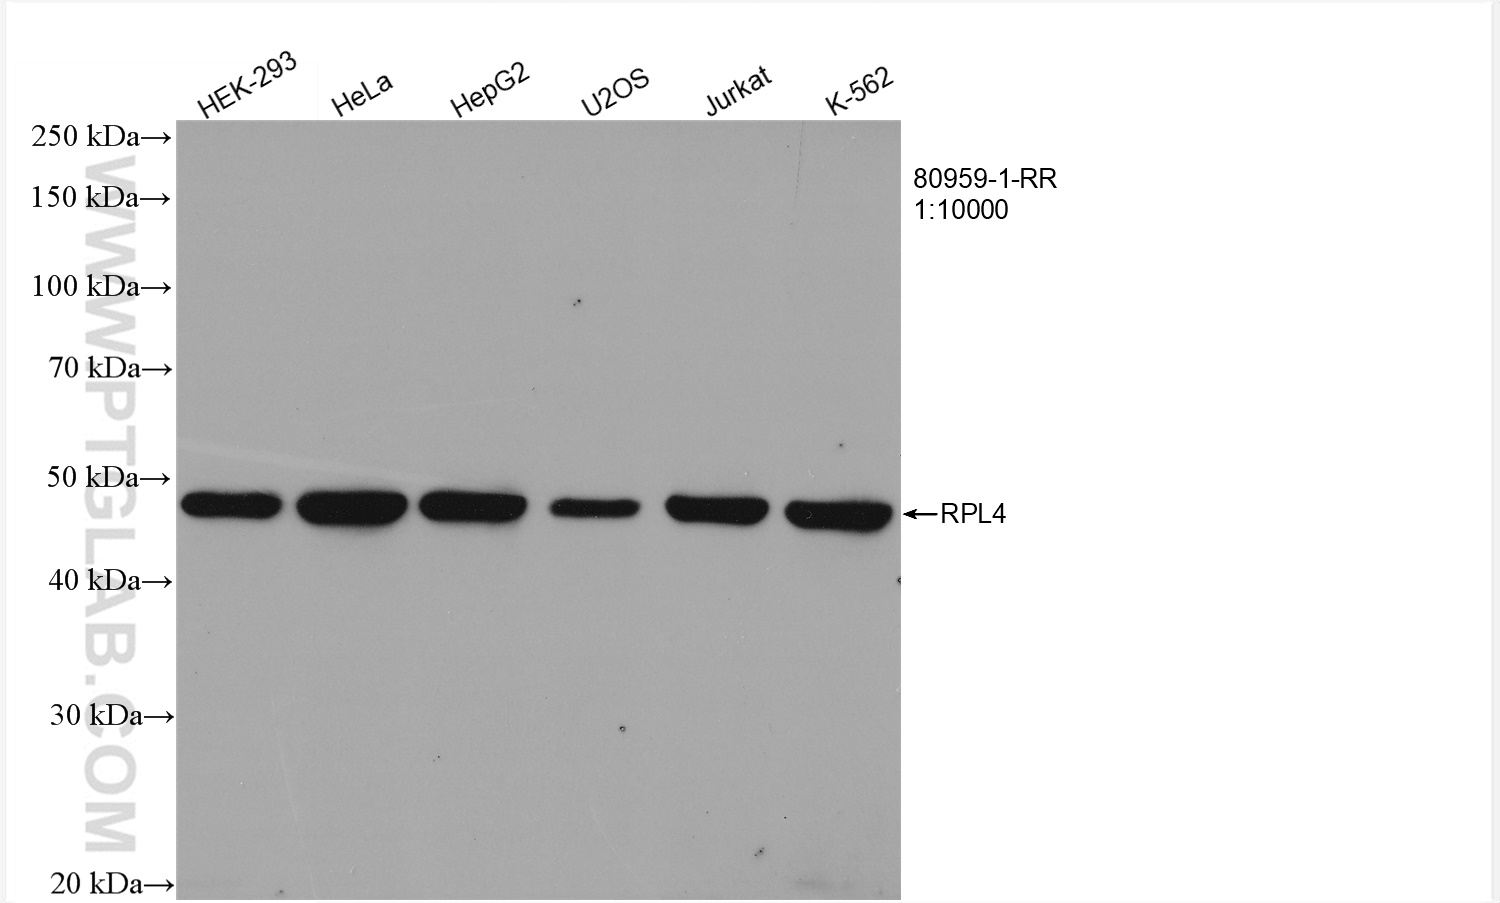 Ribosomal protein L4